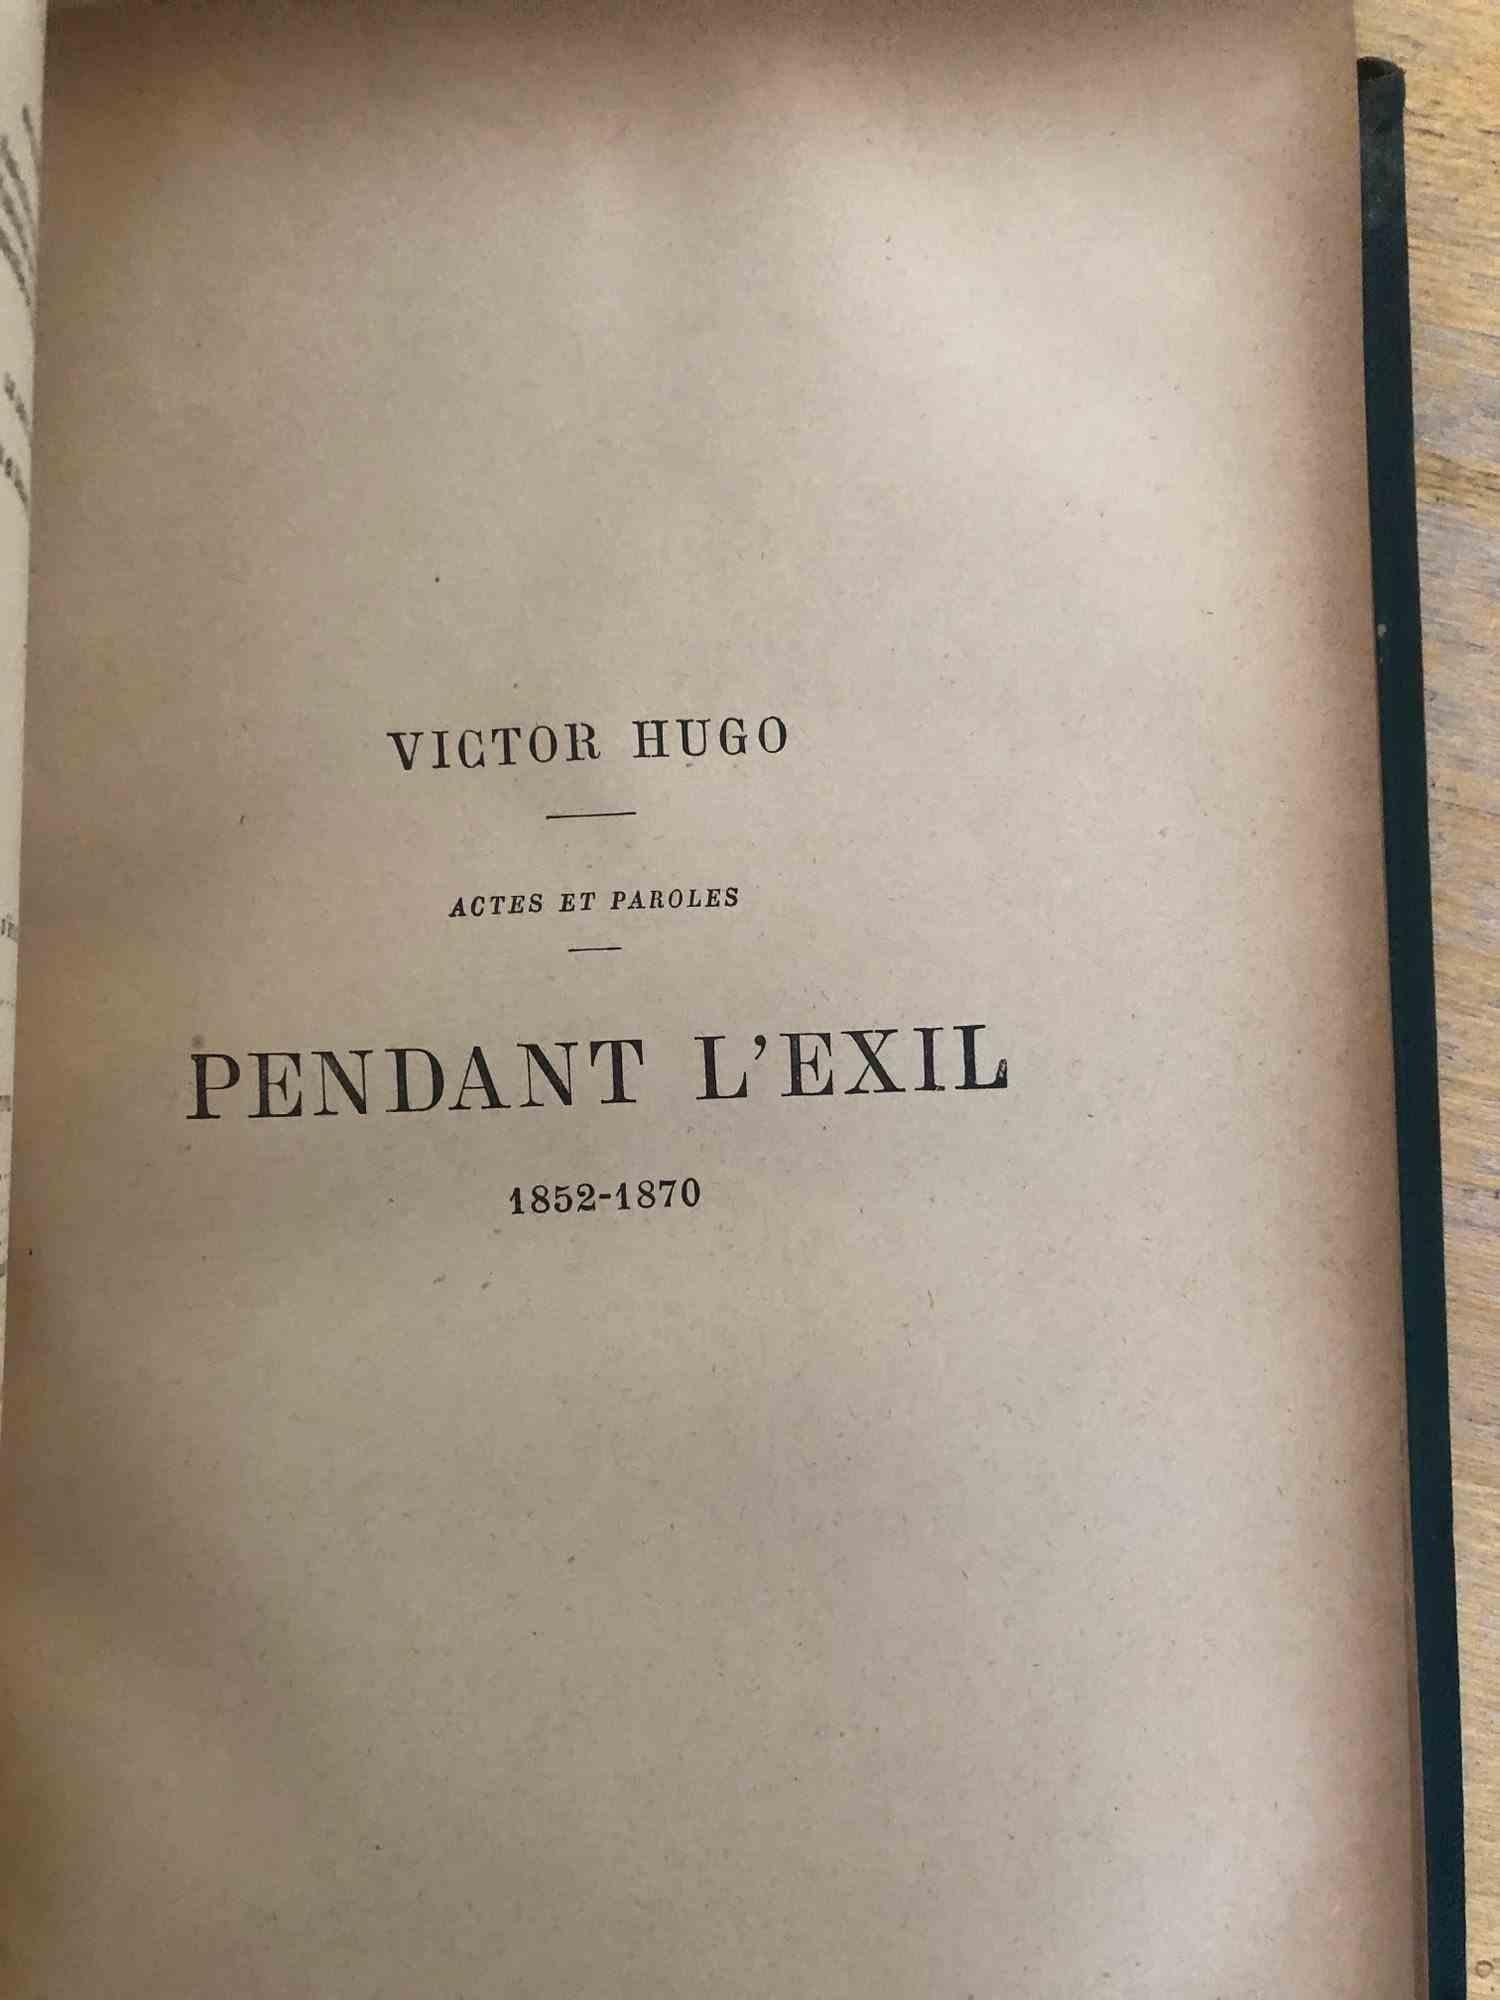 Oeuvres Complètes Illustrées - Rare Book by Victor Hugo - 1902 For Sale 1